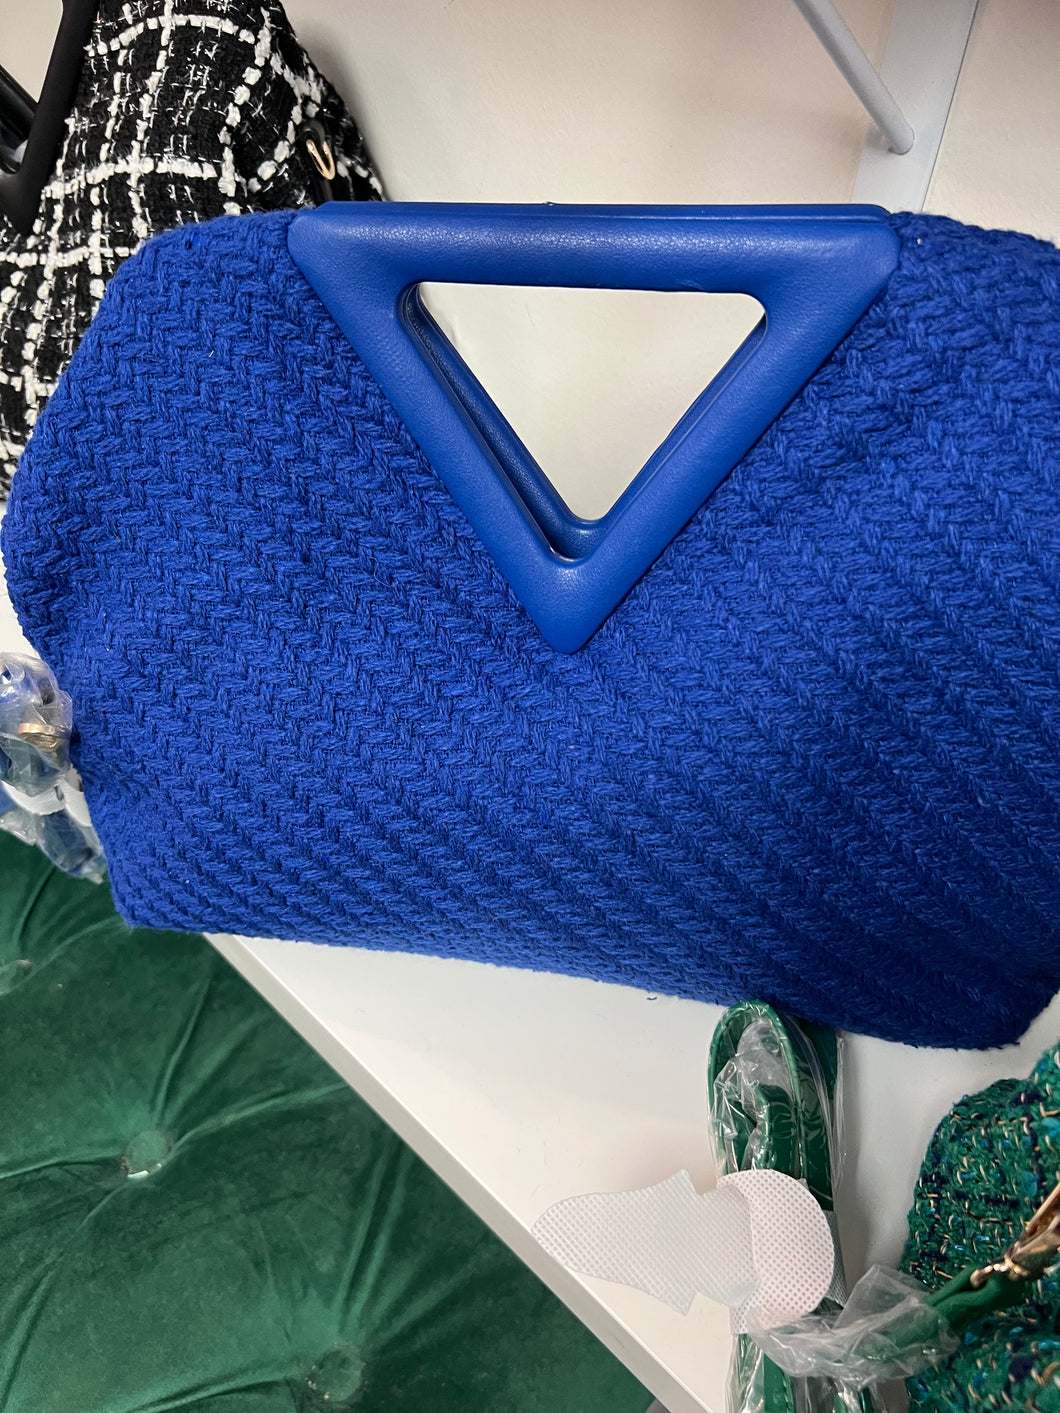 Cobalt blue tweed handbag